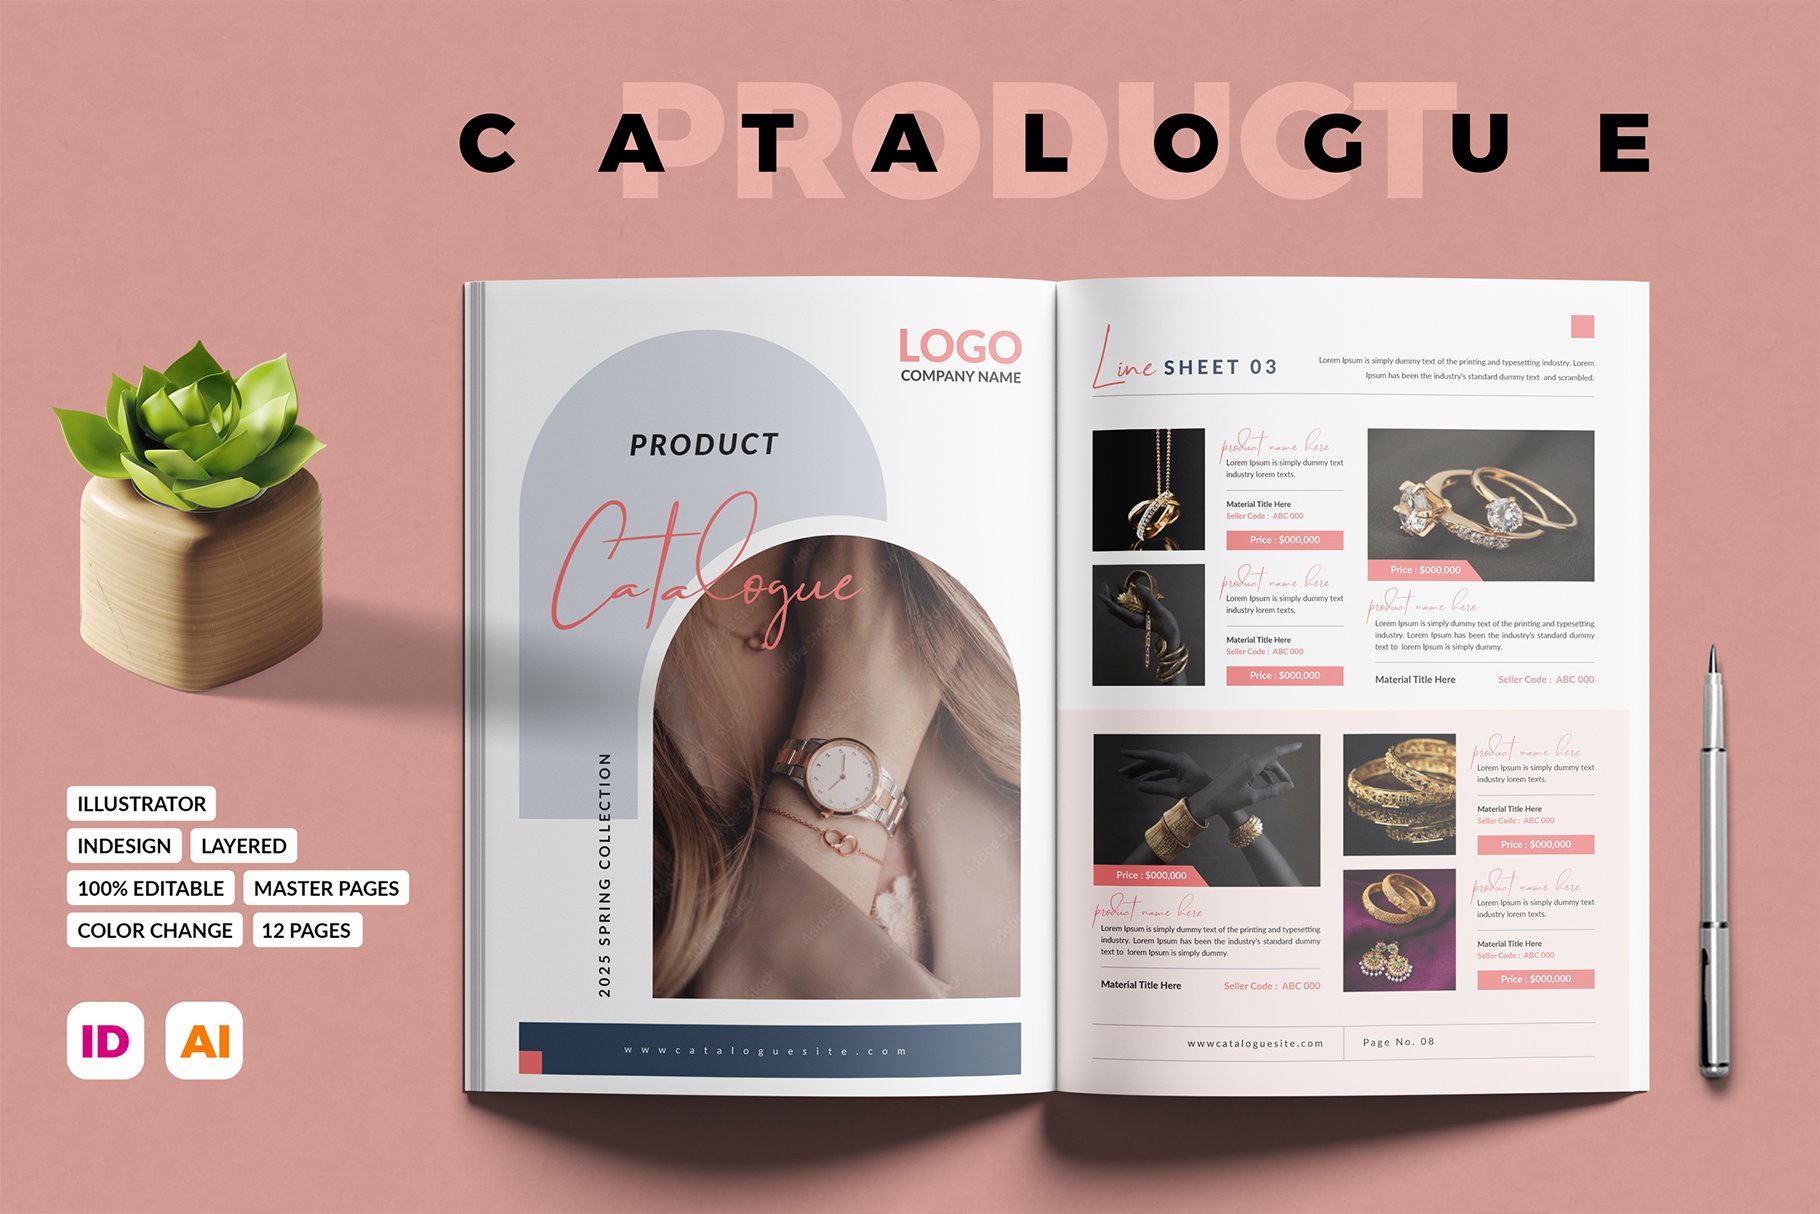 design product catalogue